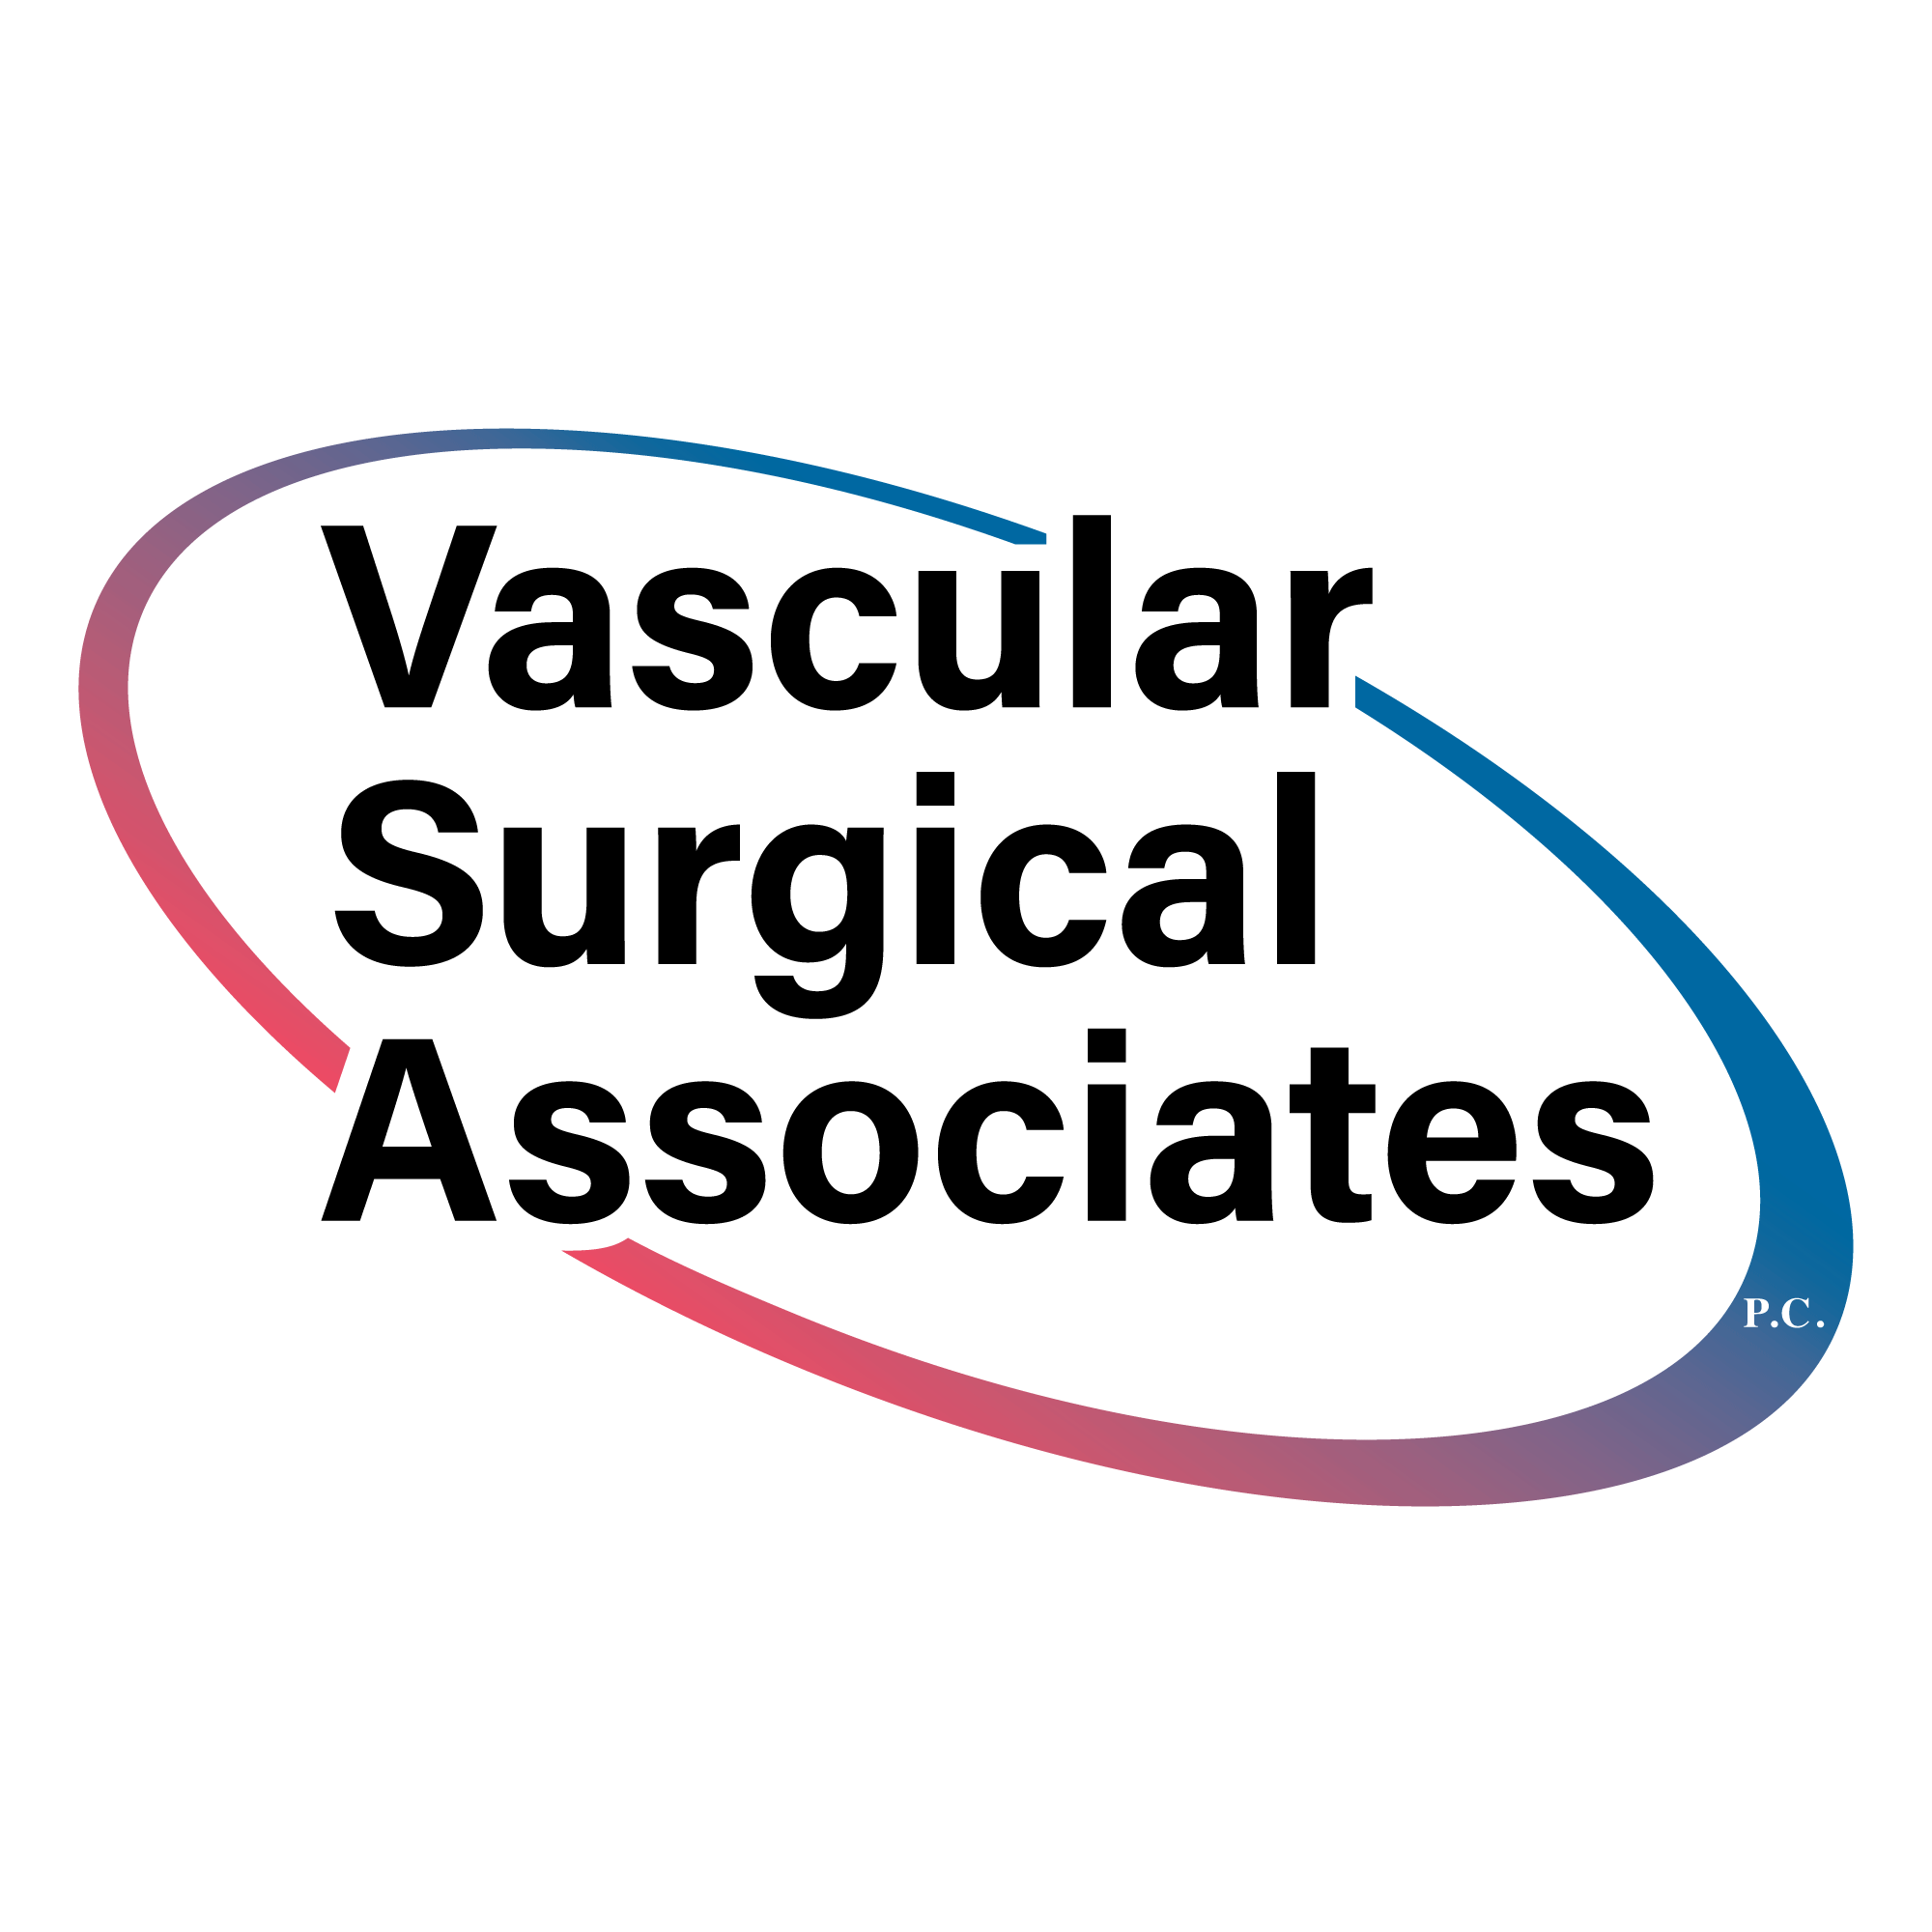 Vascular Surgical Associates